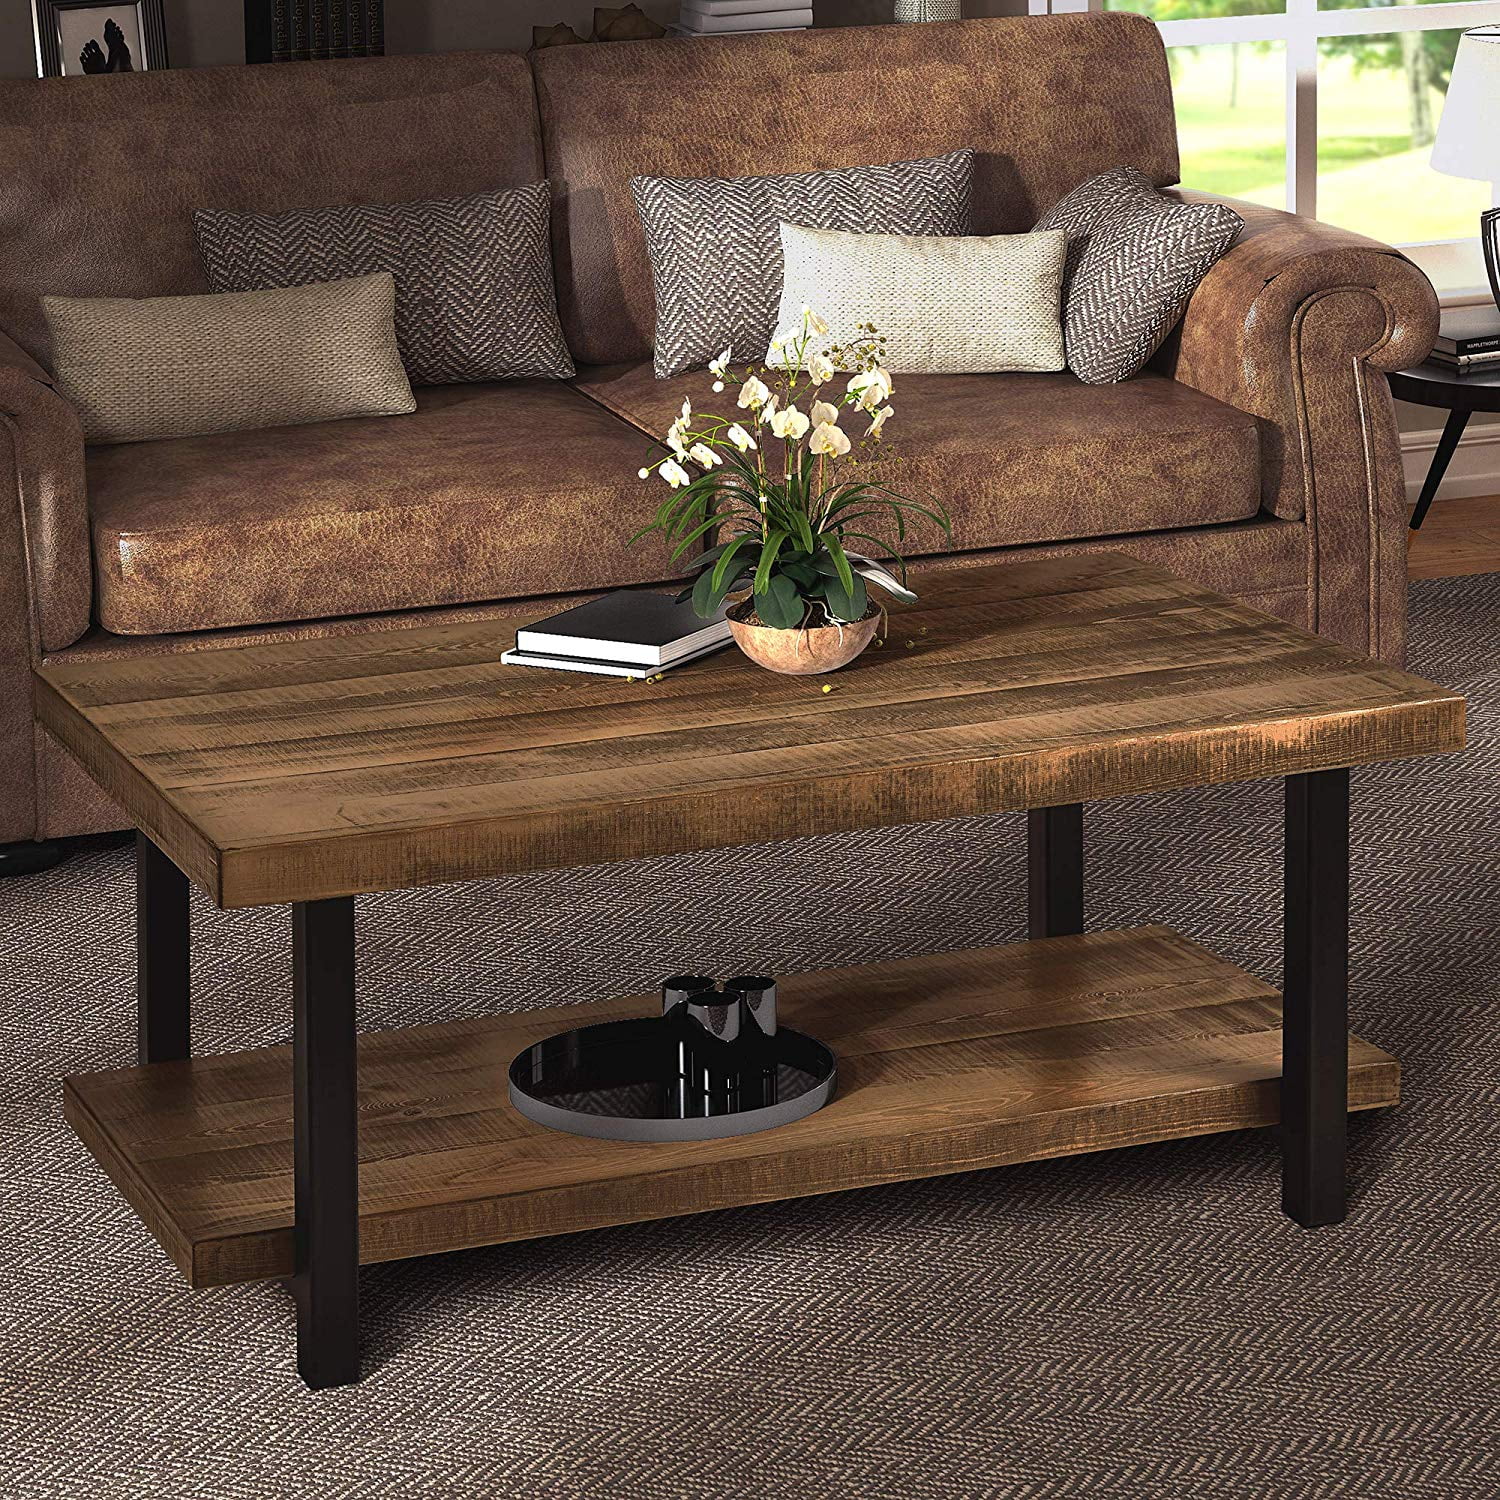 Harper&Bright Designs Industrial Rectangular Pine Wood Coffee Table